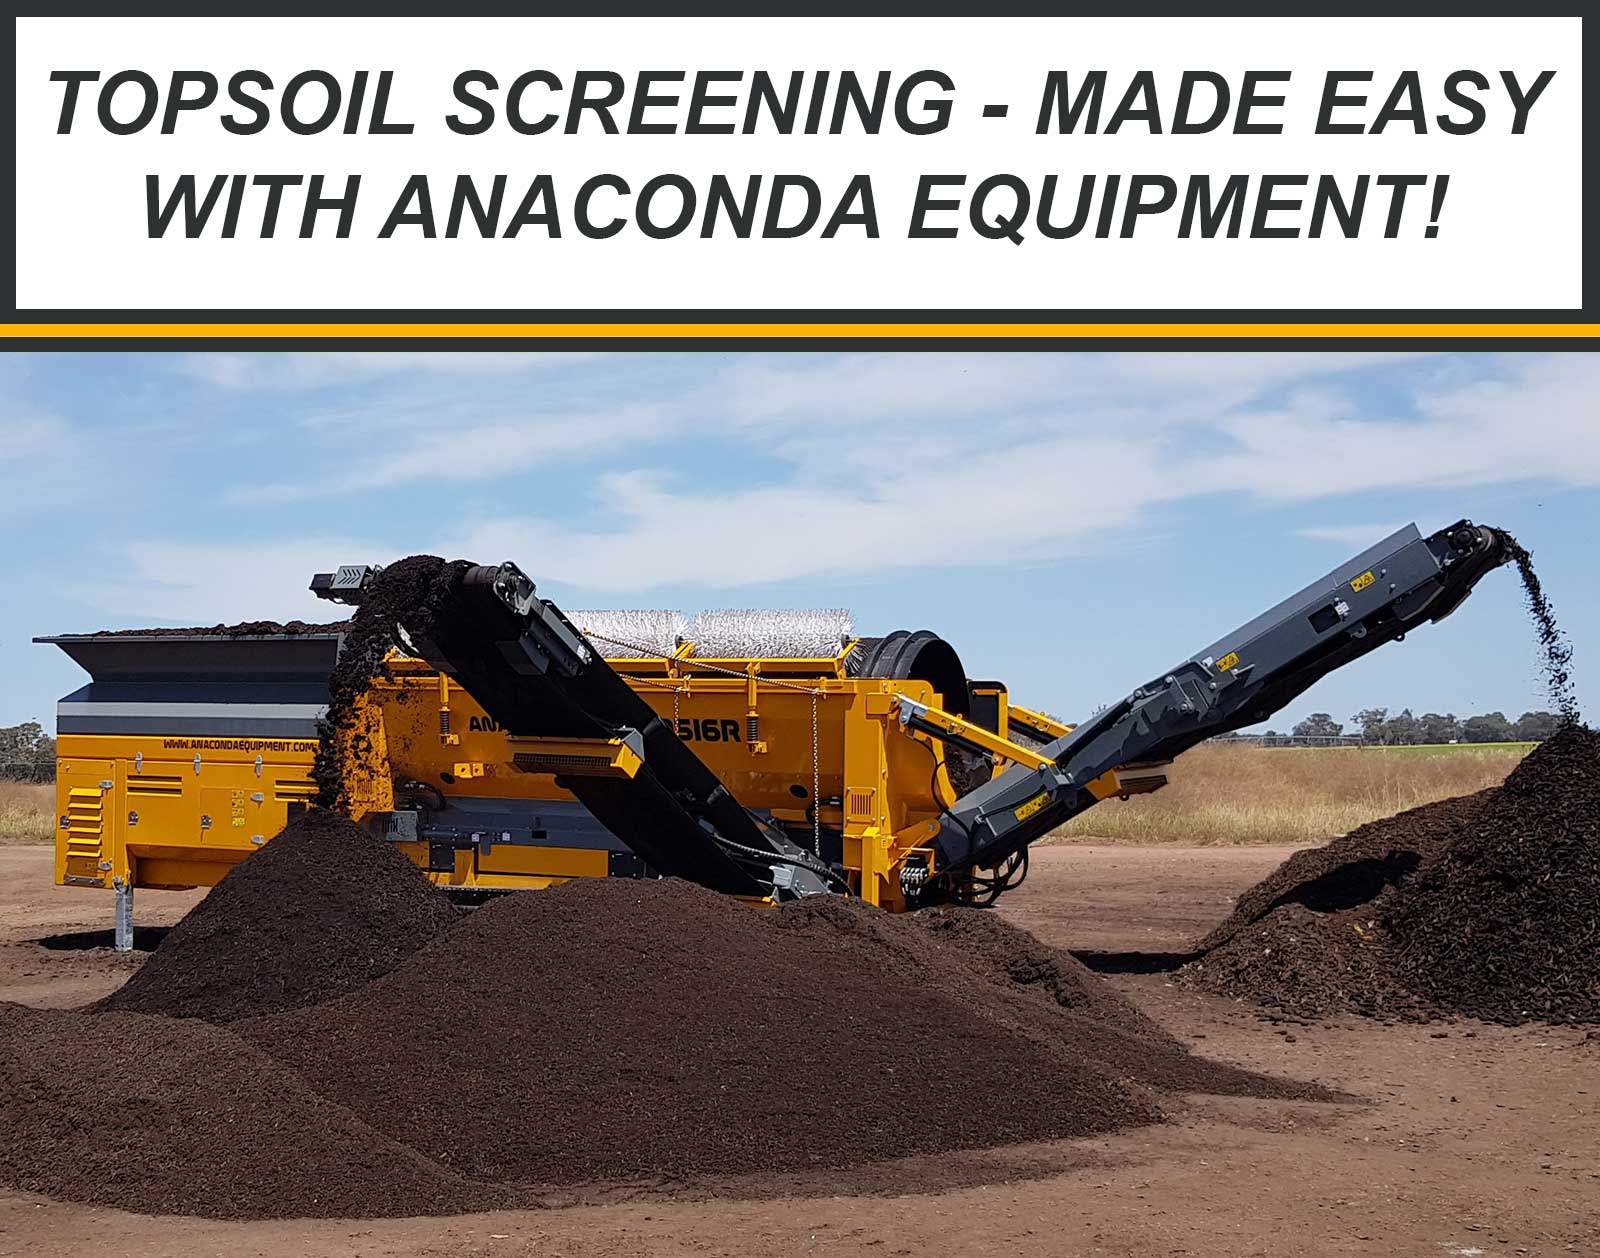 Screening topsoil with Anaconda Equipment